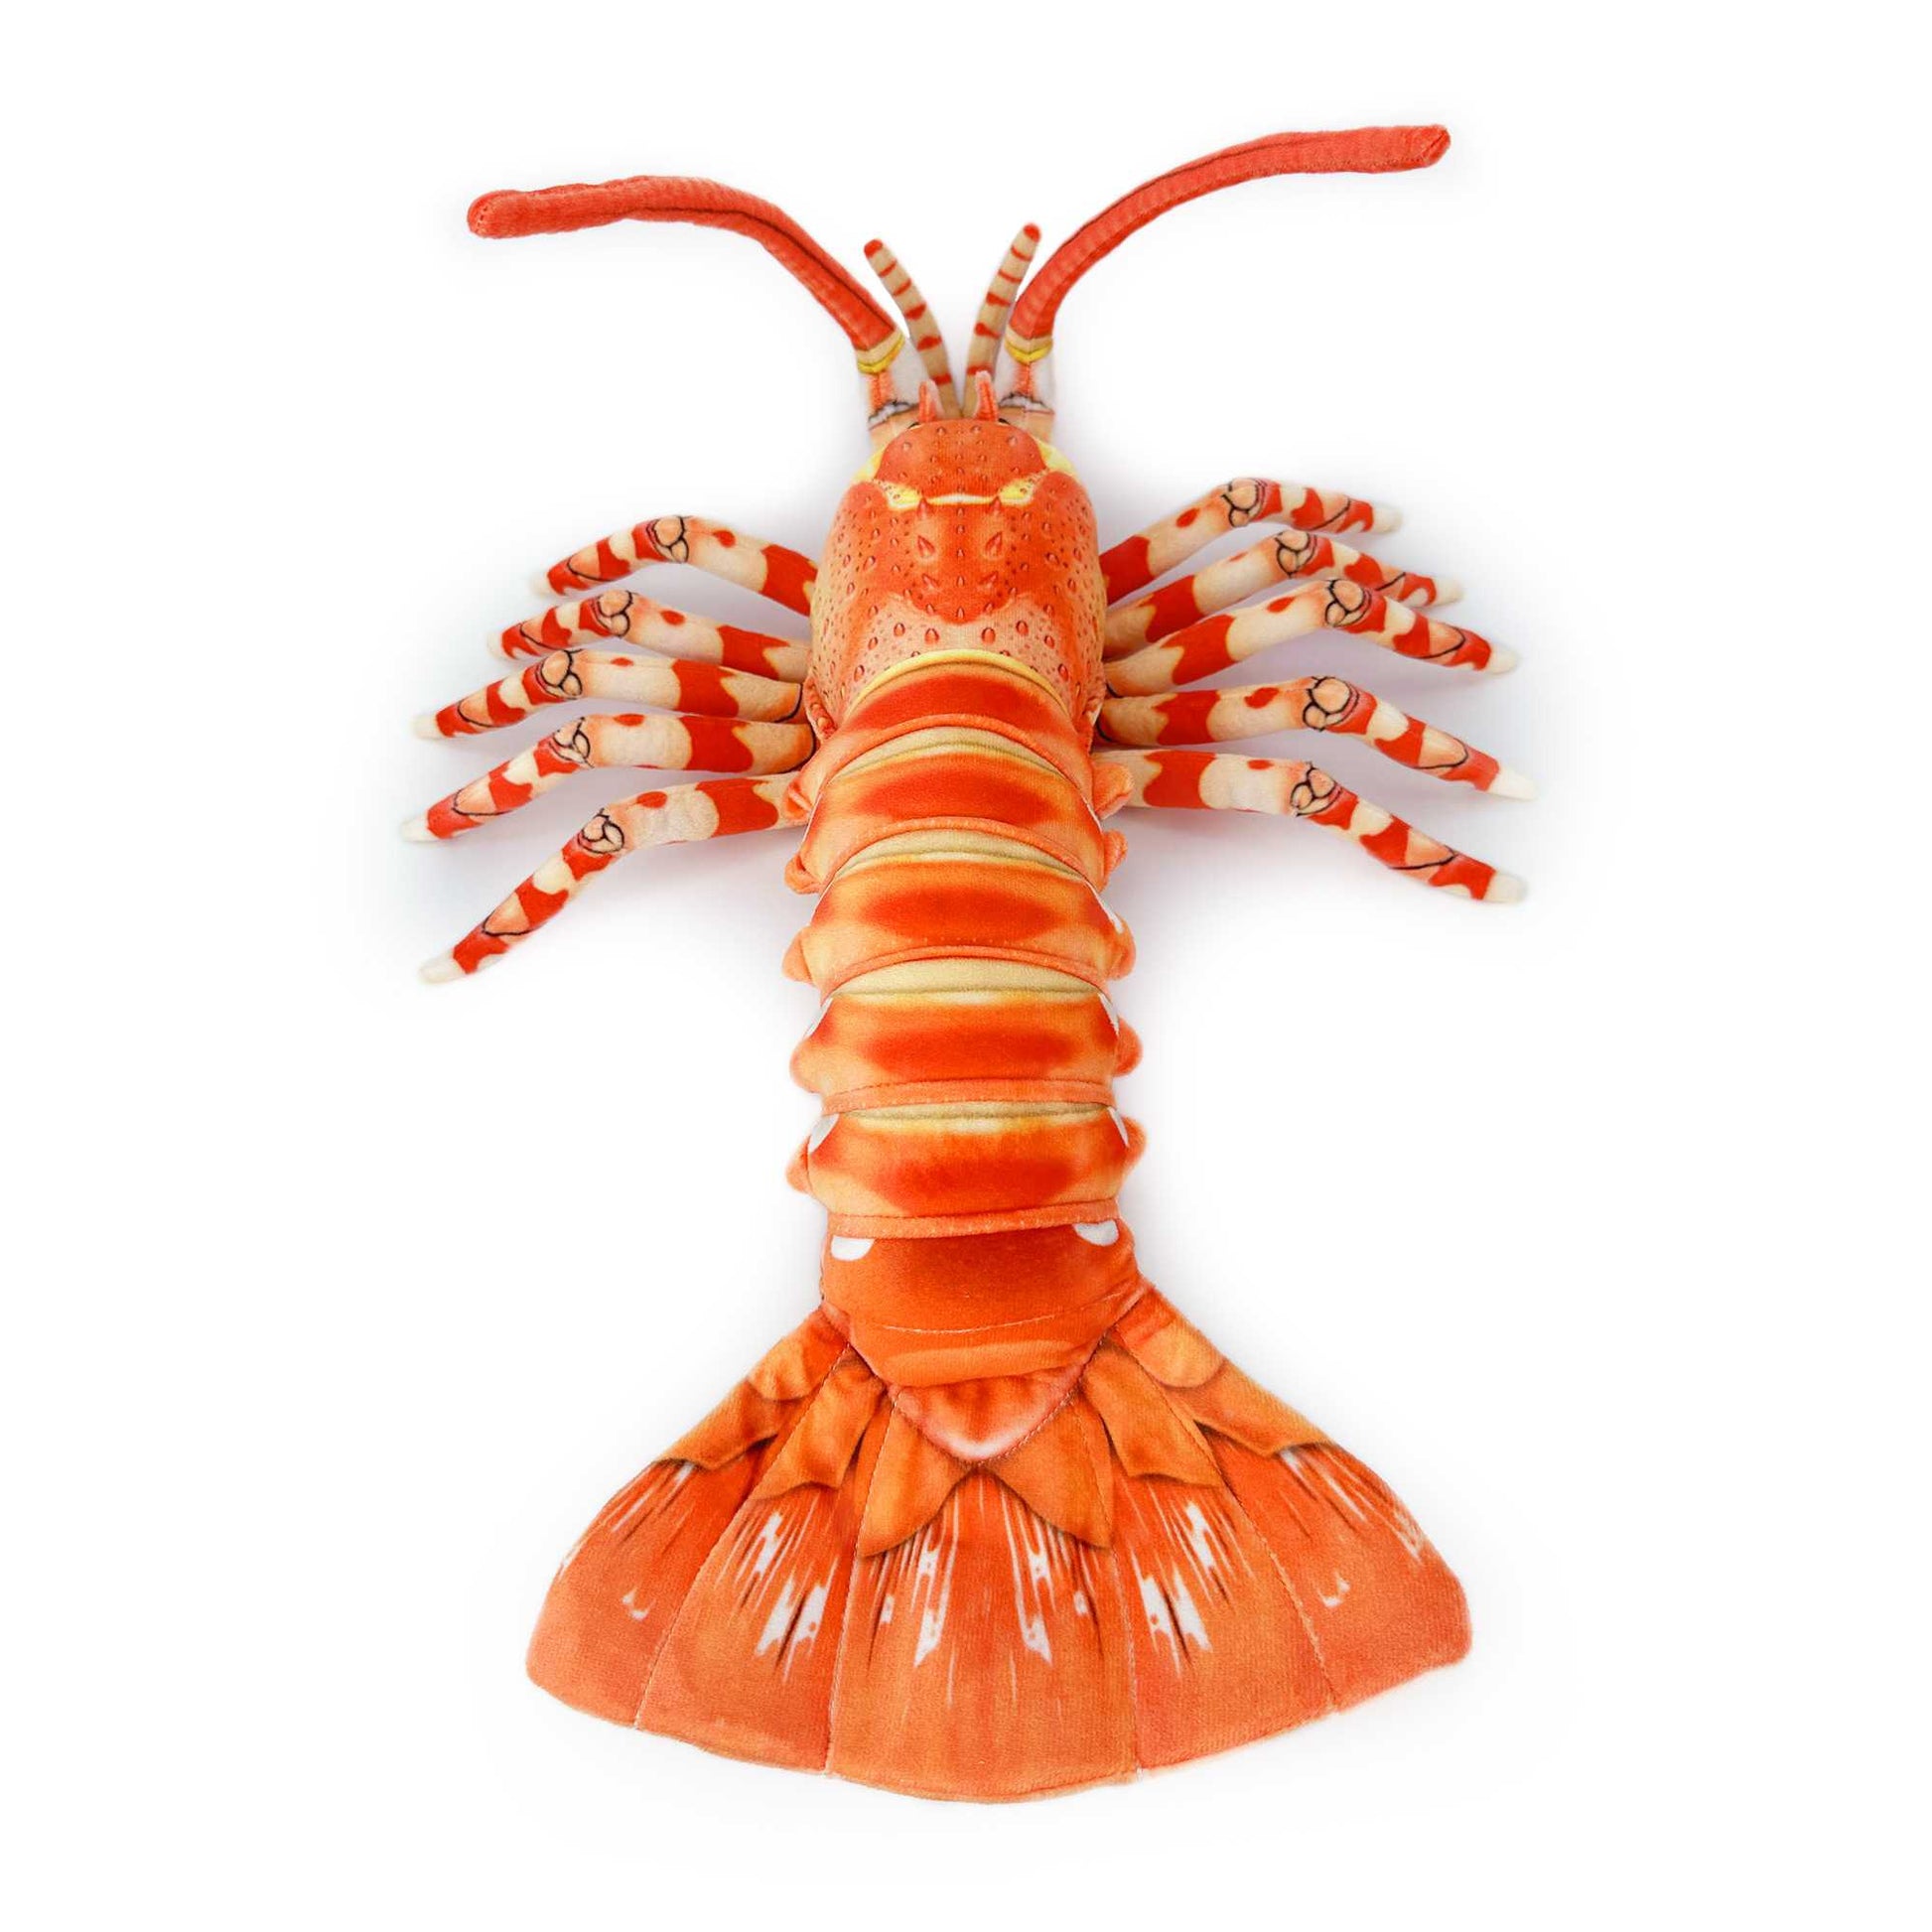 southern rock lobster Jasus edwardsii stuffed animal